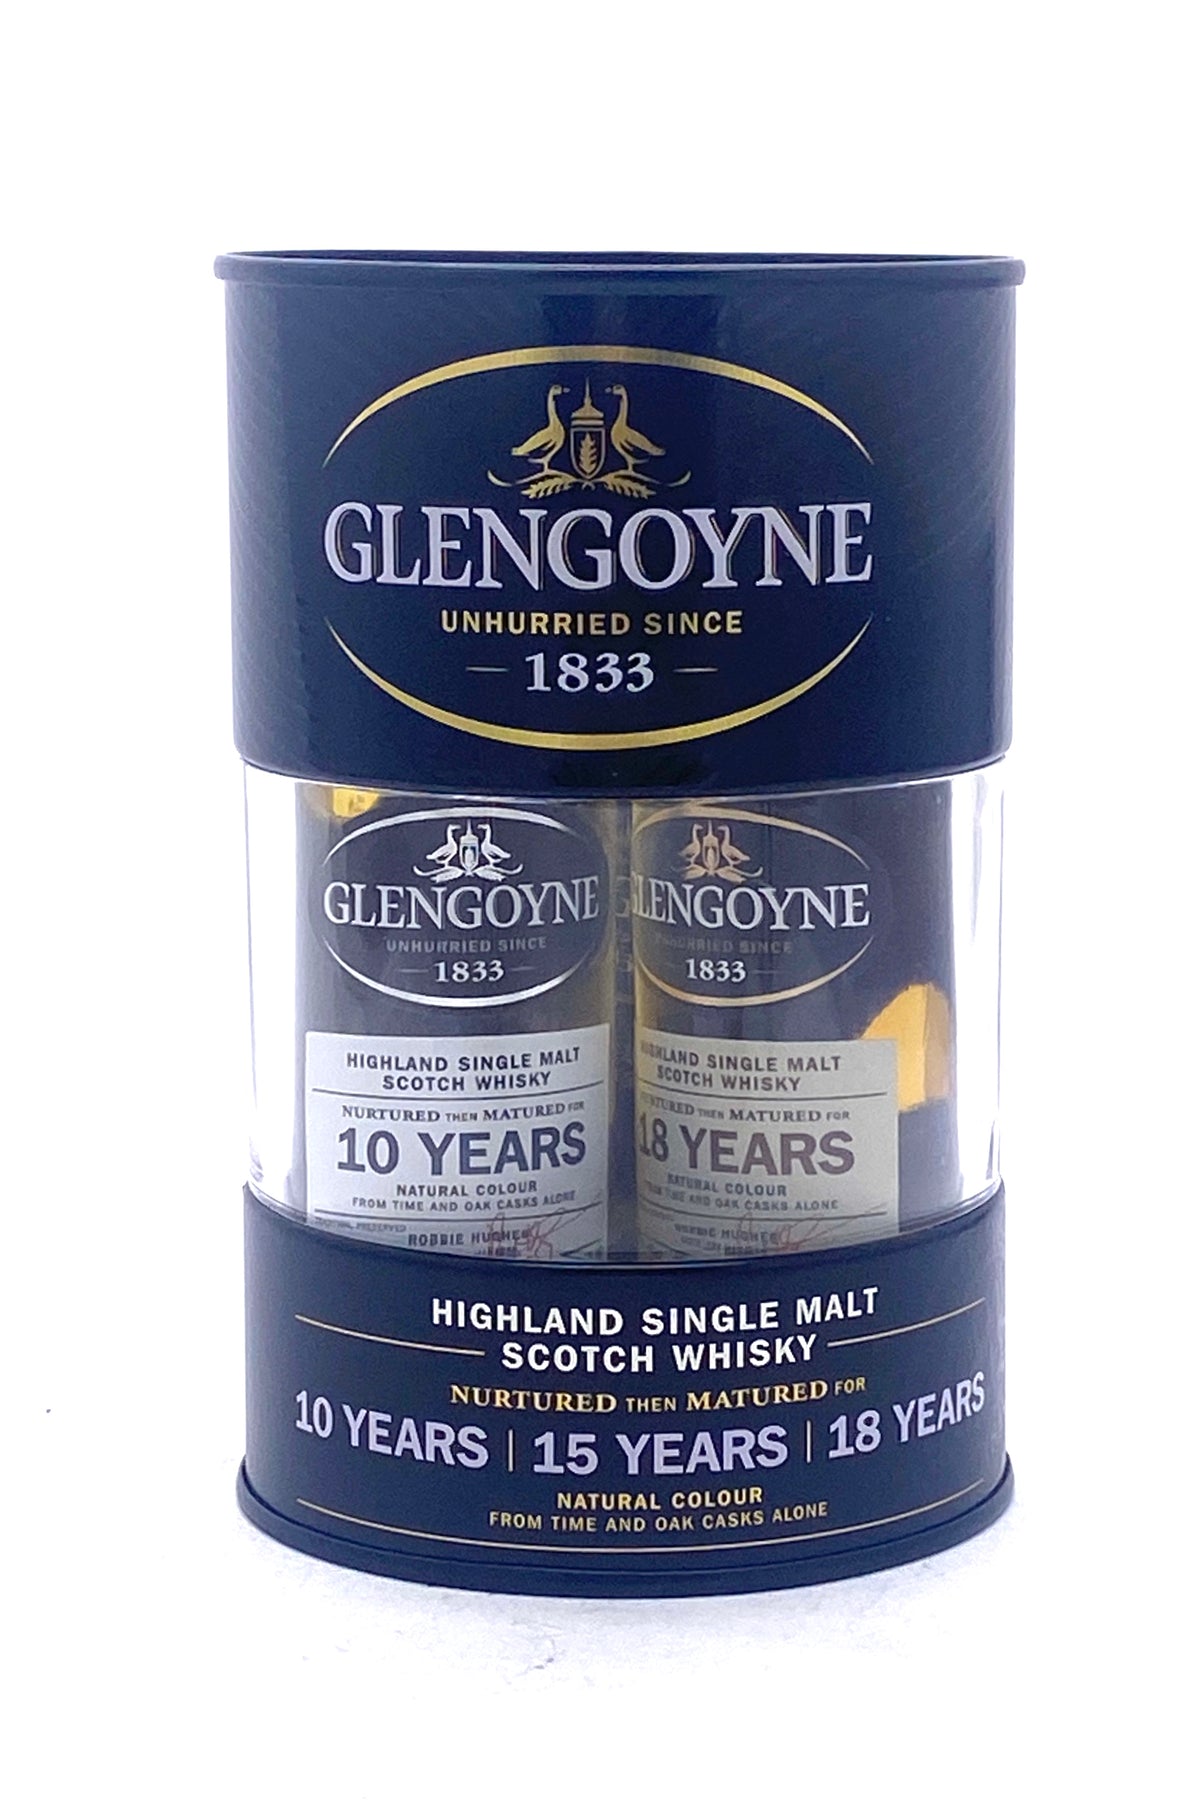 Glengoyne Gift Pack (1 x 10 Year, 1 x 15 Year, 1 x 18 Year) Scotch Whisky 3 x 50 ml